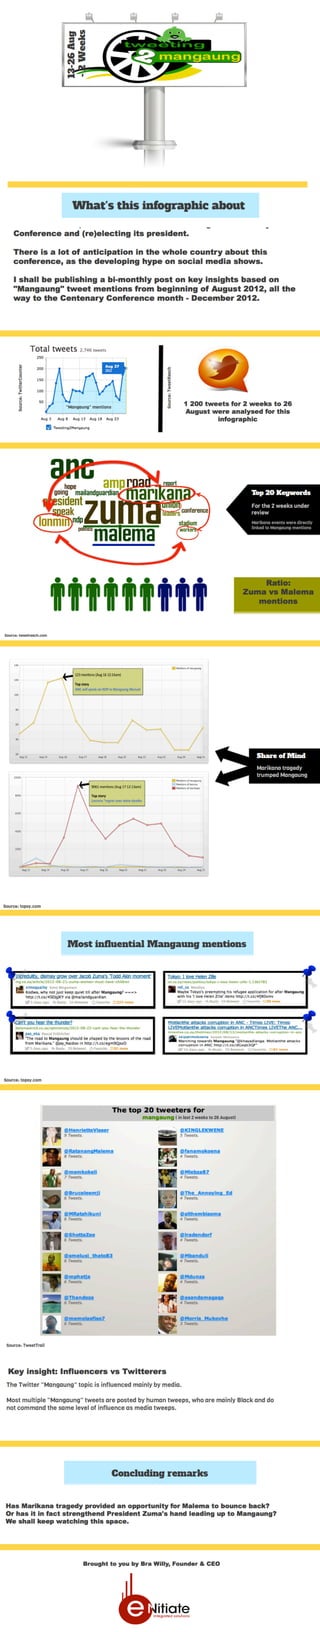 Tweeting2Mangaung infographic - 13-26 august 2012